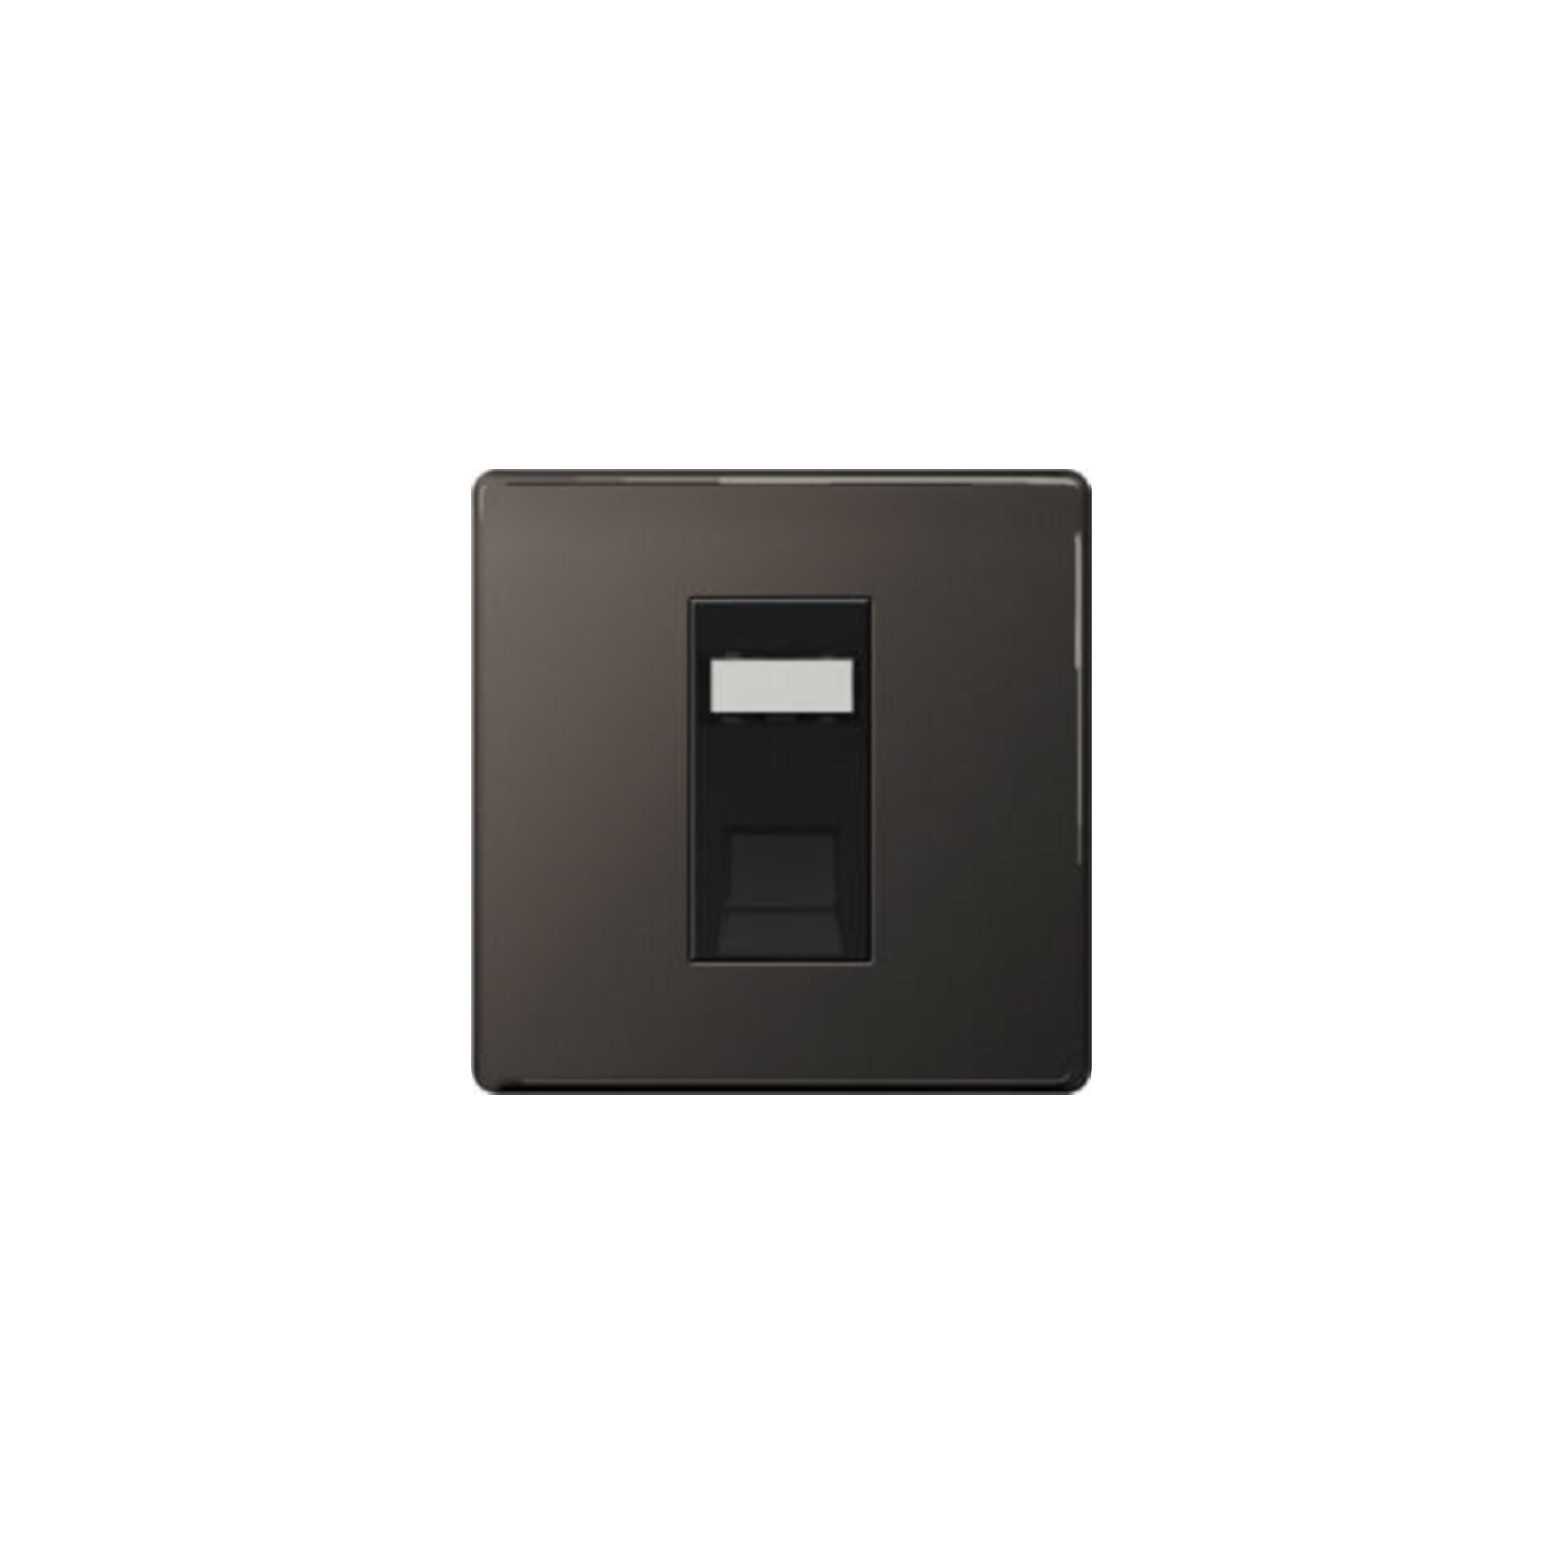 Flatplate Black Nickel 1-Gang RJ45 Data(Internet) Socket, single screwless clip-on front flatplate(FBNRJ451)